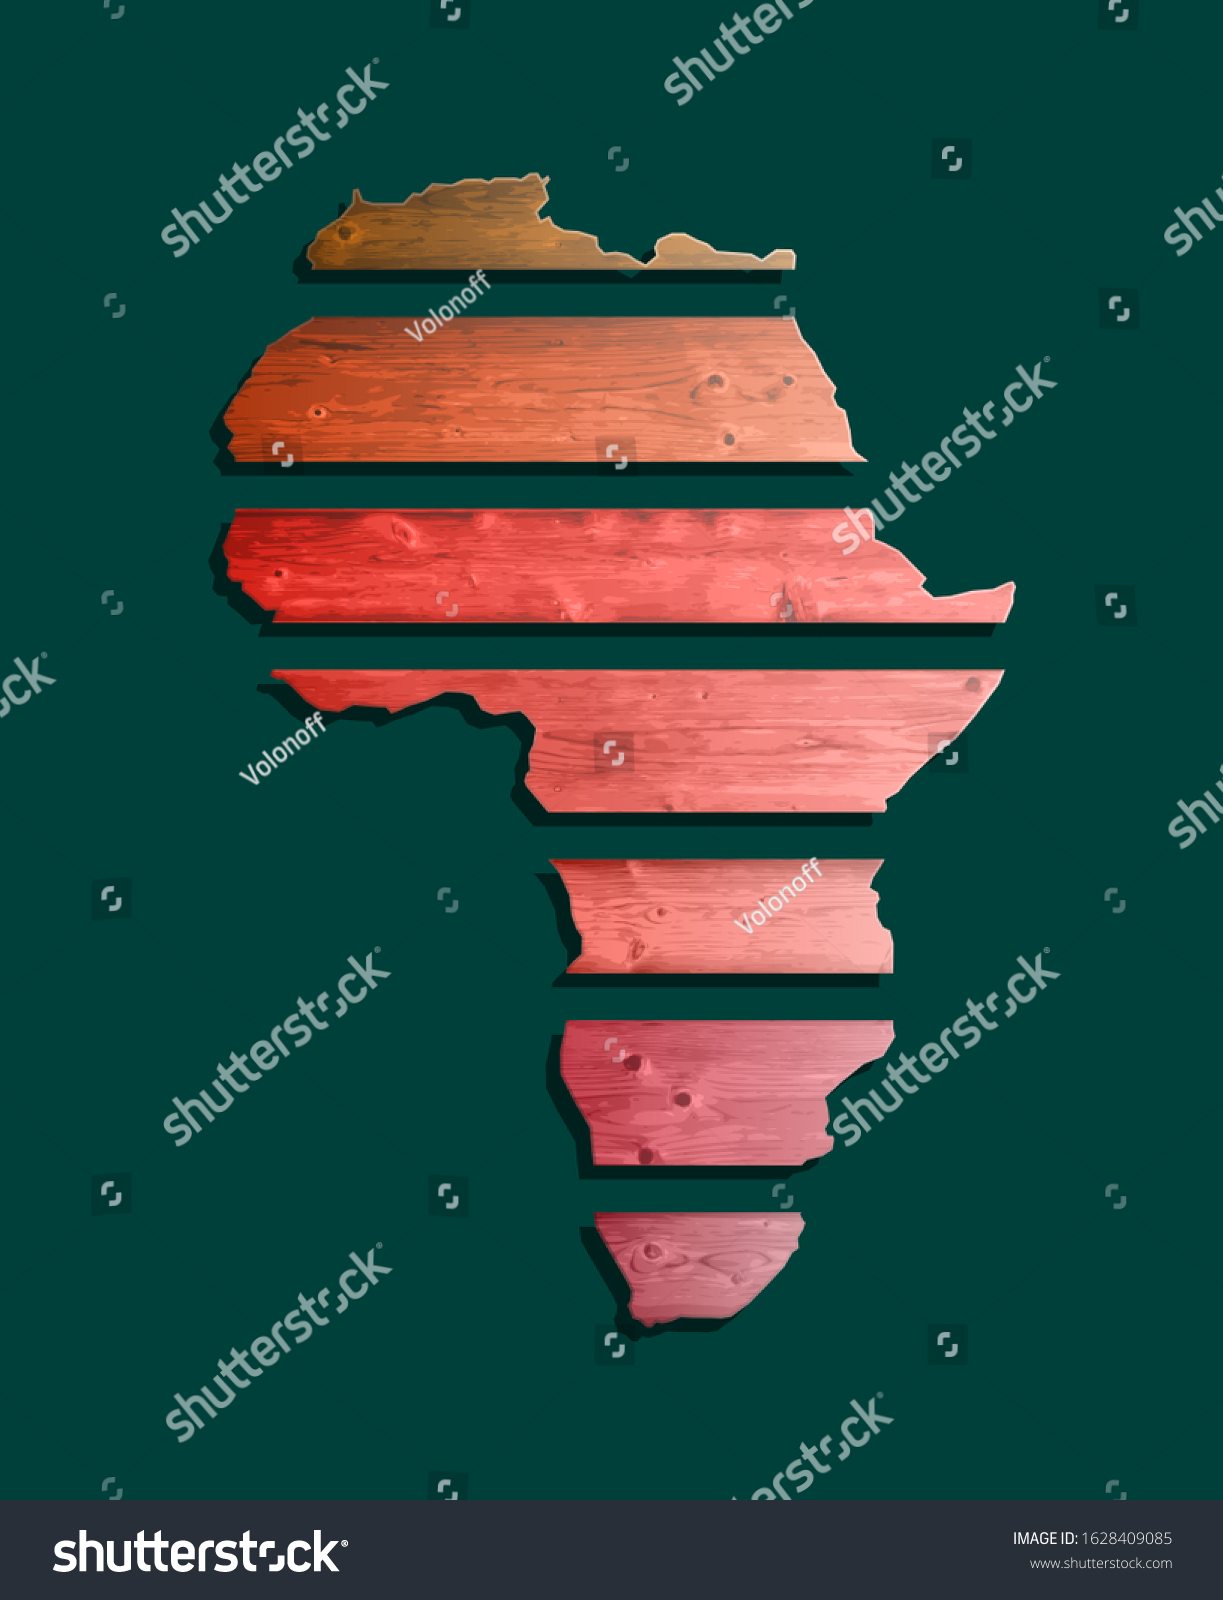 Sketch Wooden African Continent Map Banner Ilustración De Stock 1628409085 Shutterstock 3523